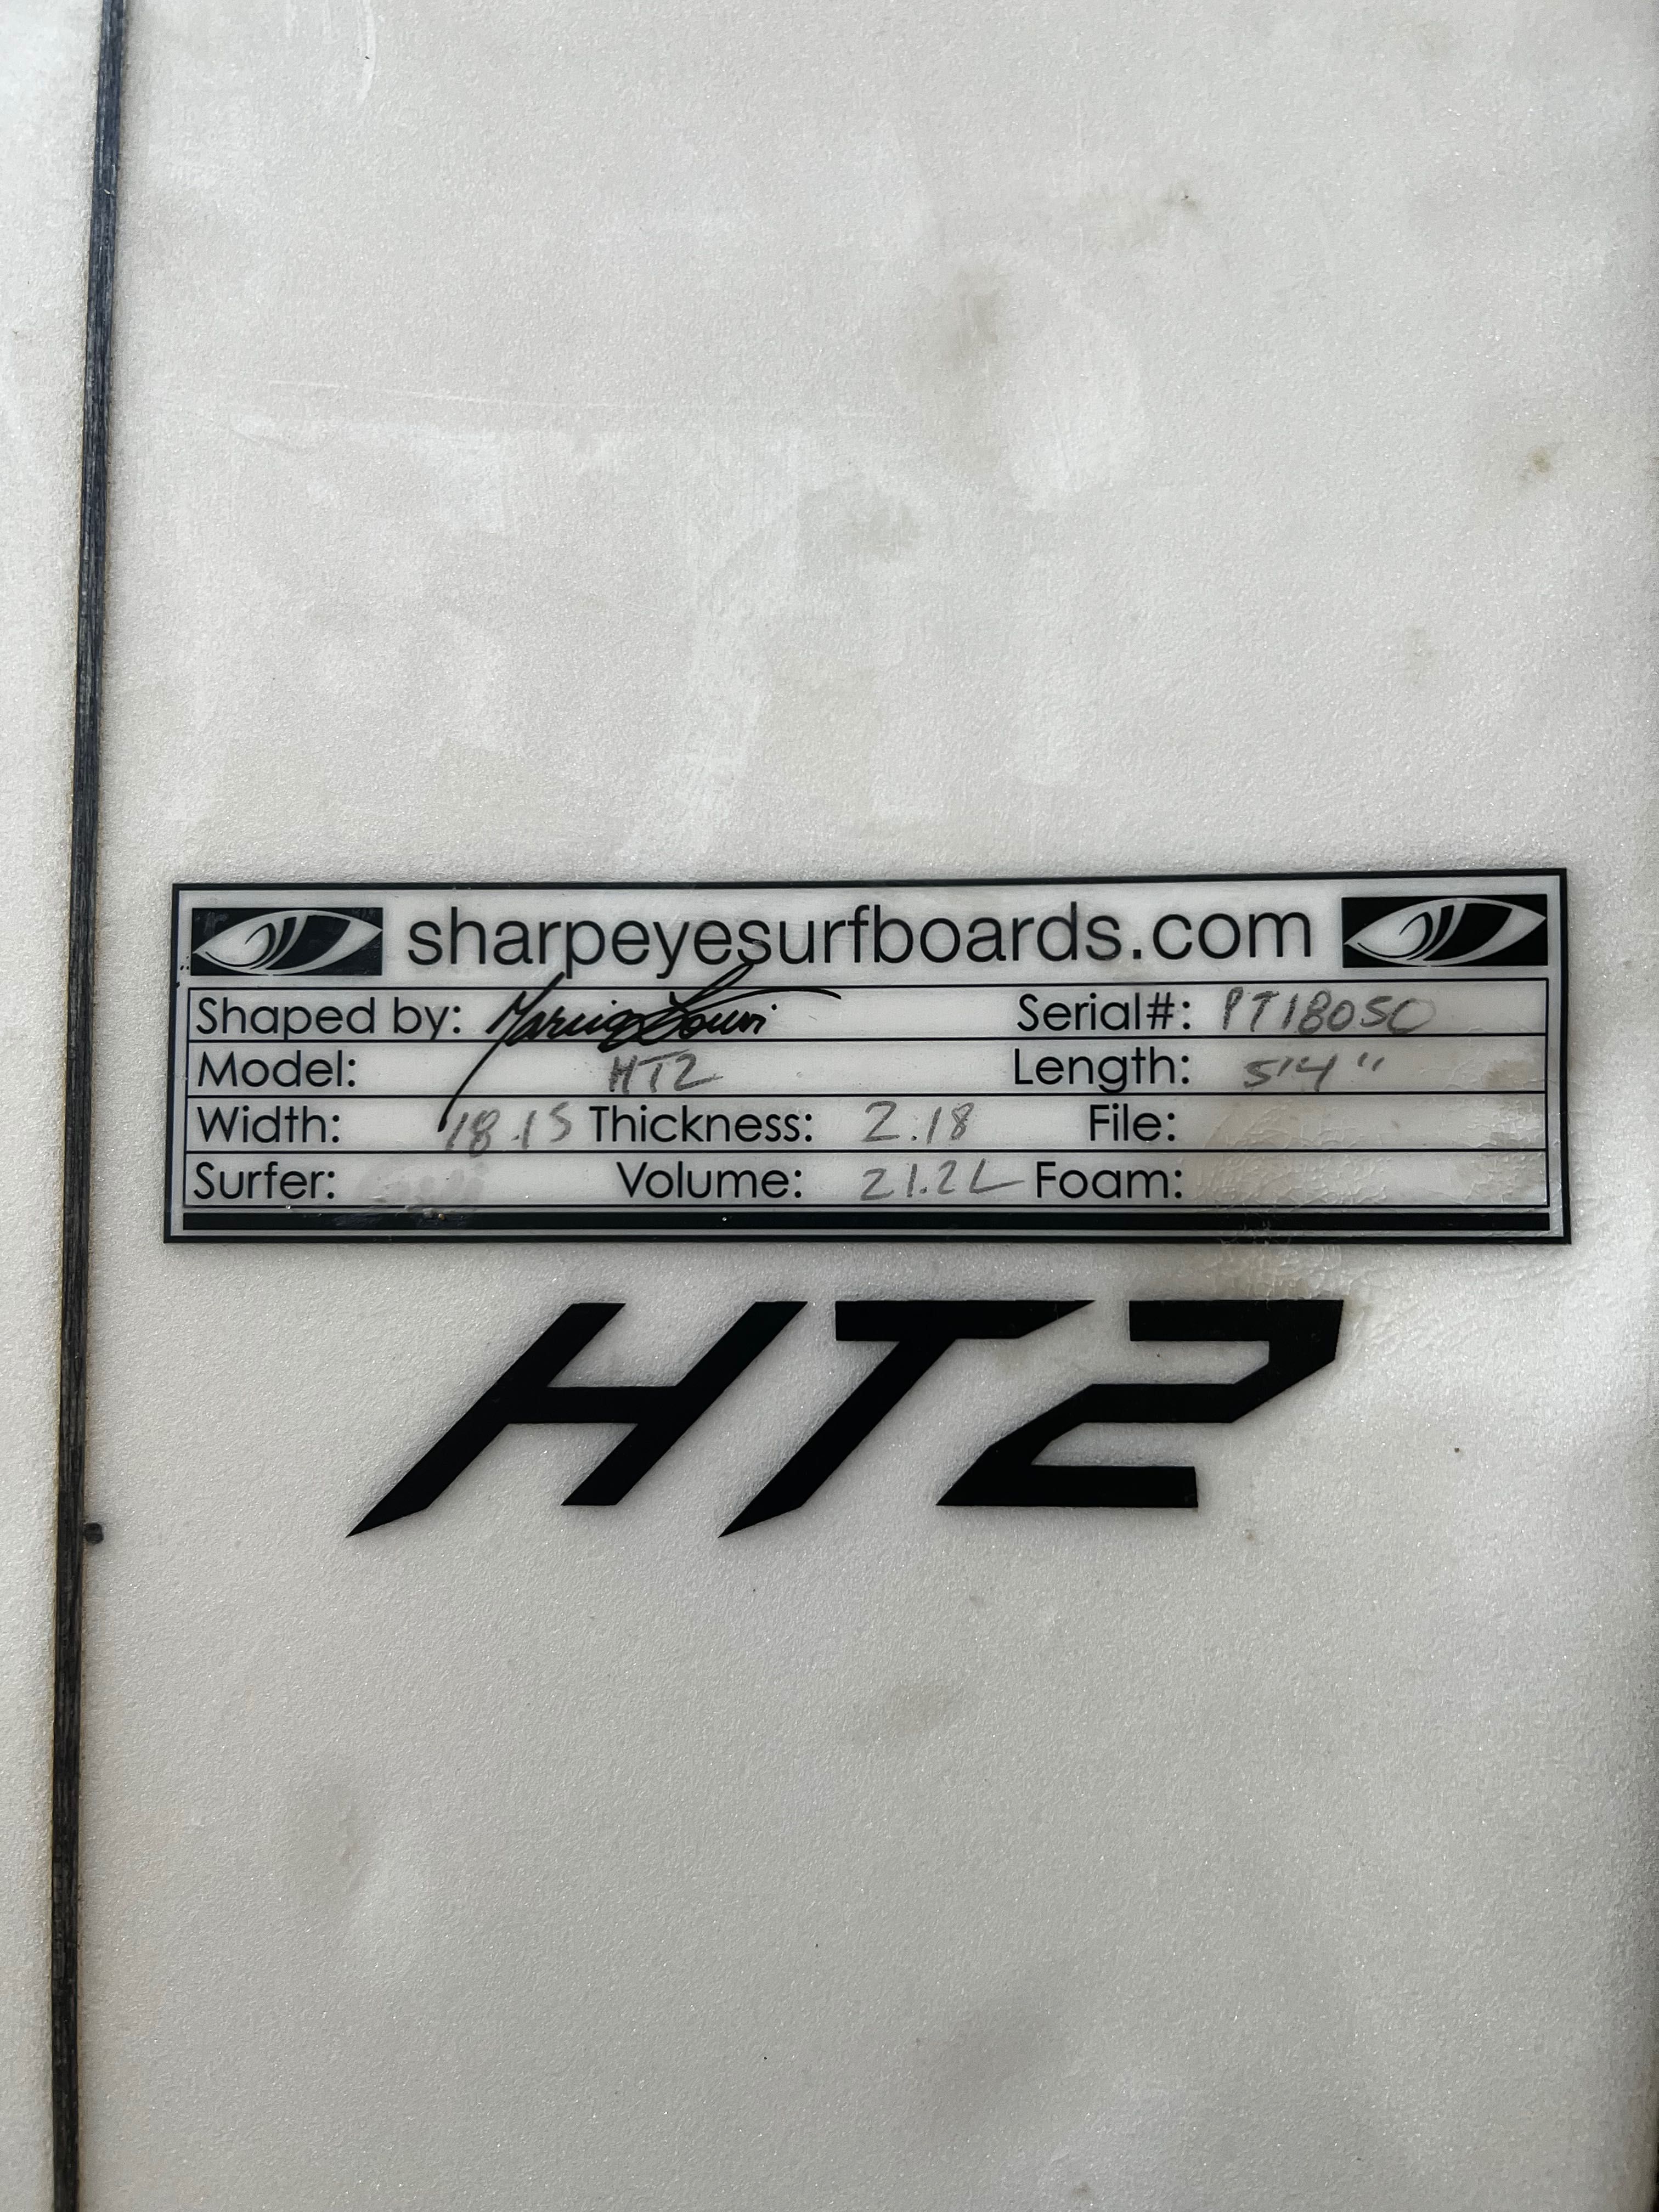 Pranchas surf Sharpeye grom models HTC e #77